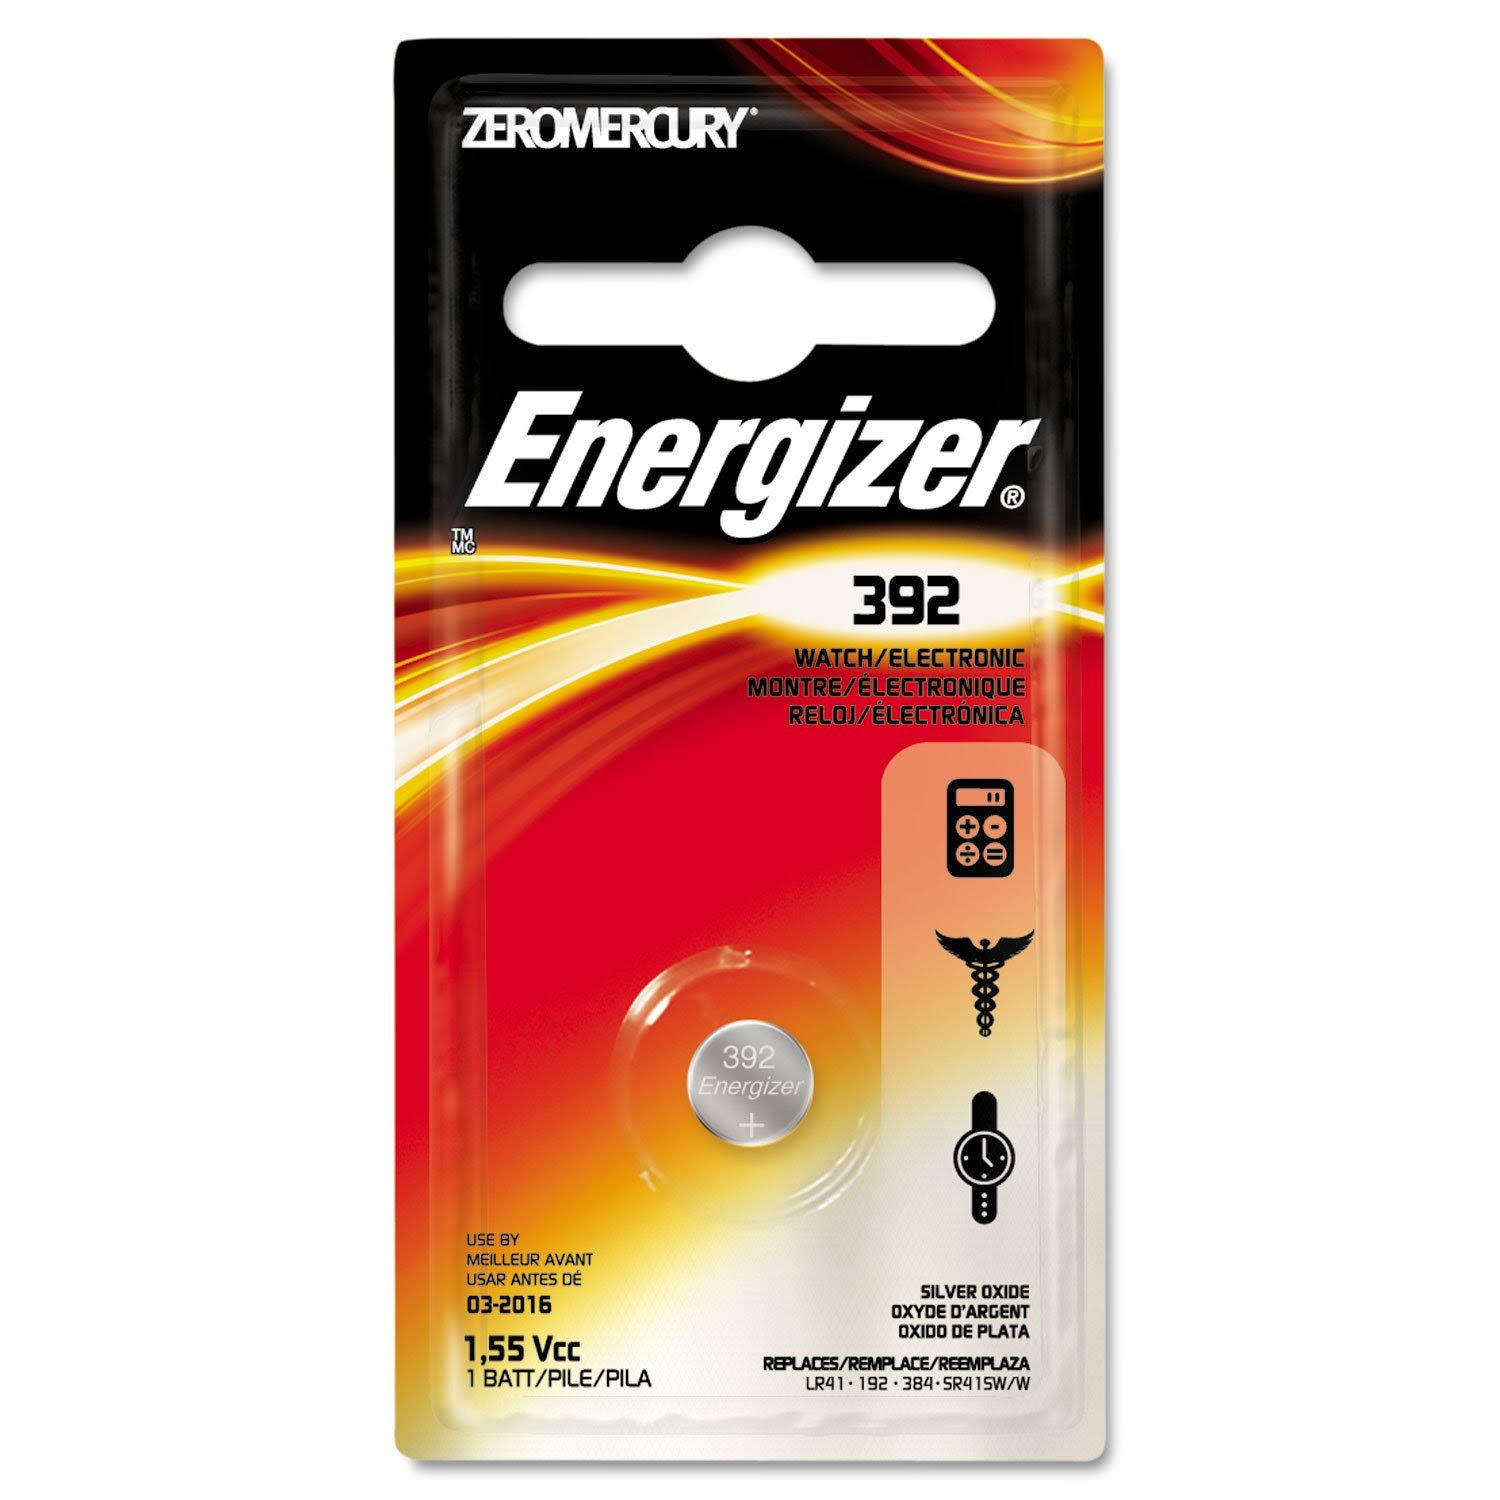 Energizer 392 Watch Electronic Battery